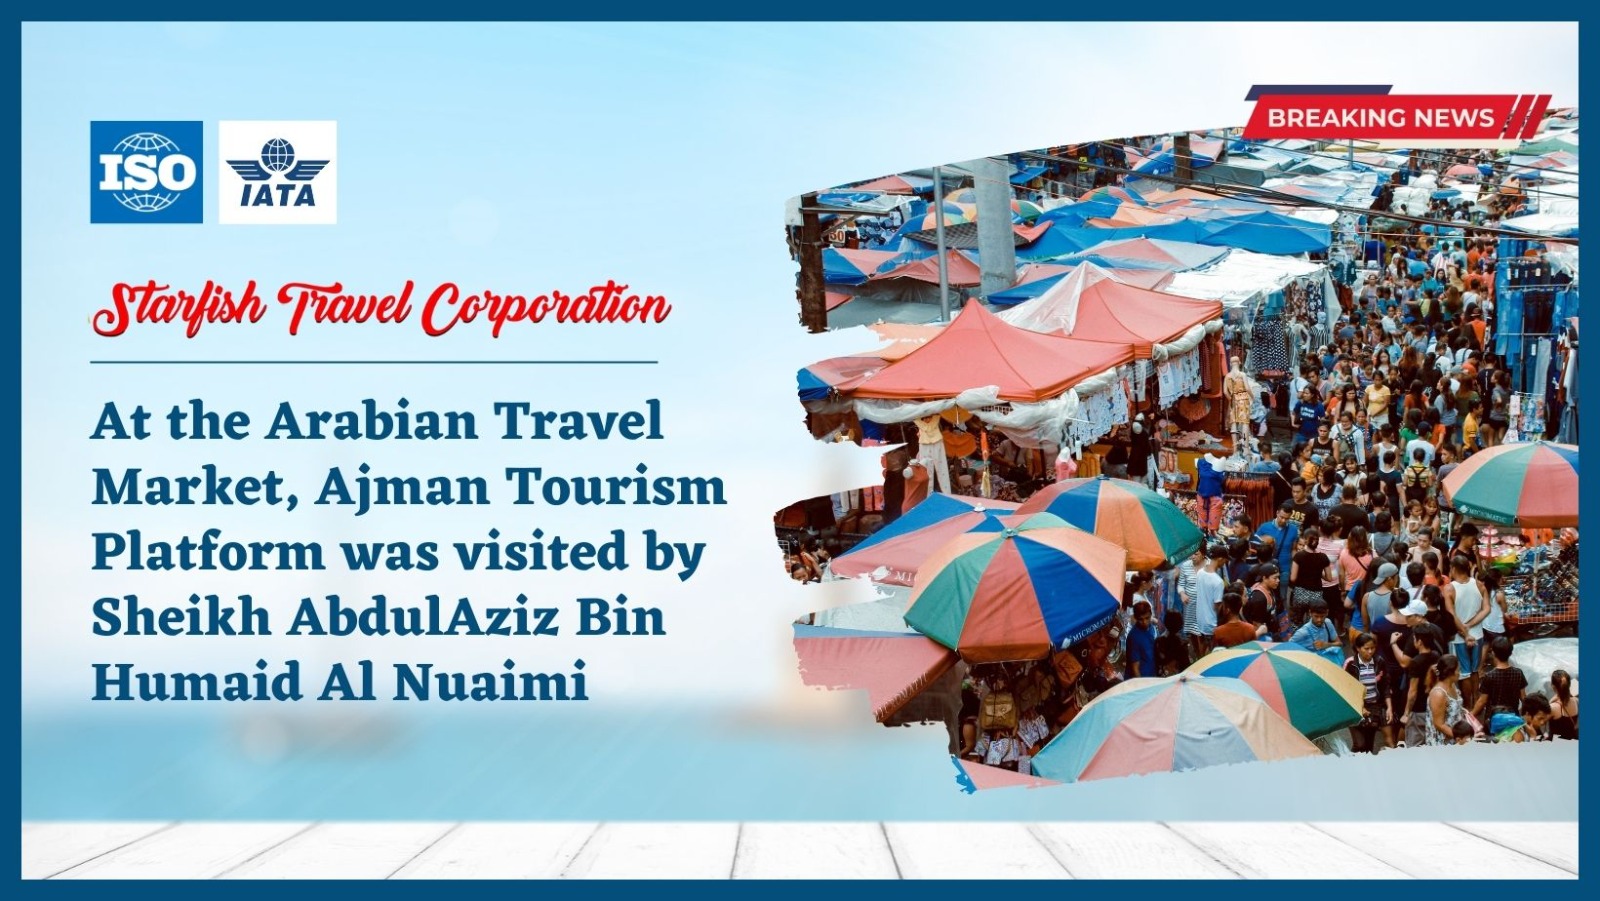 At the Arabian Travel Market, Ajman Tourism Platform was visited by Sheikh AbdulAziz Bin Humaid Al Nuaimi.